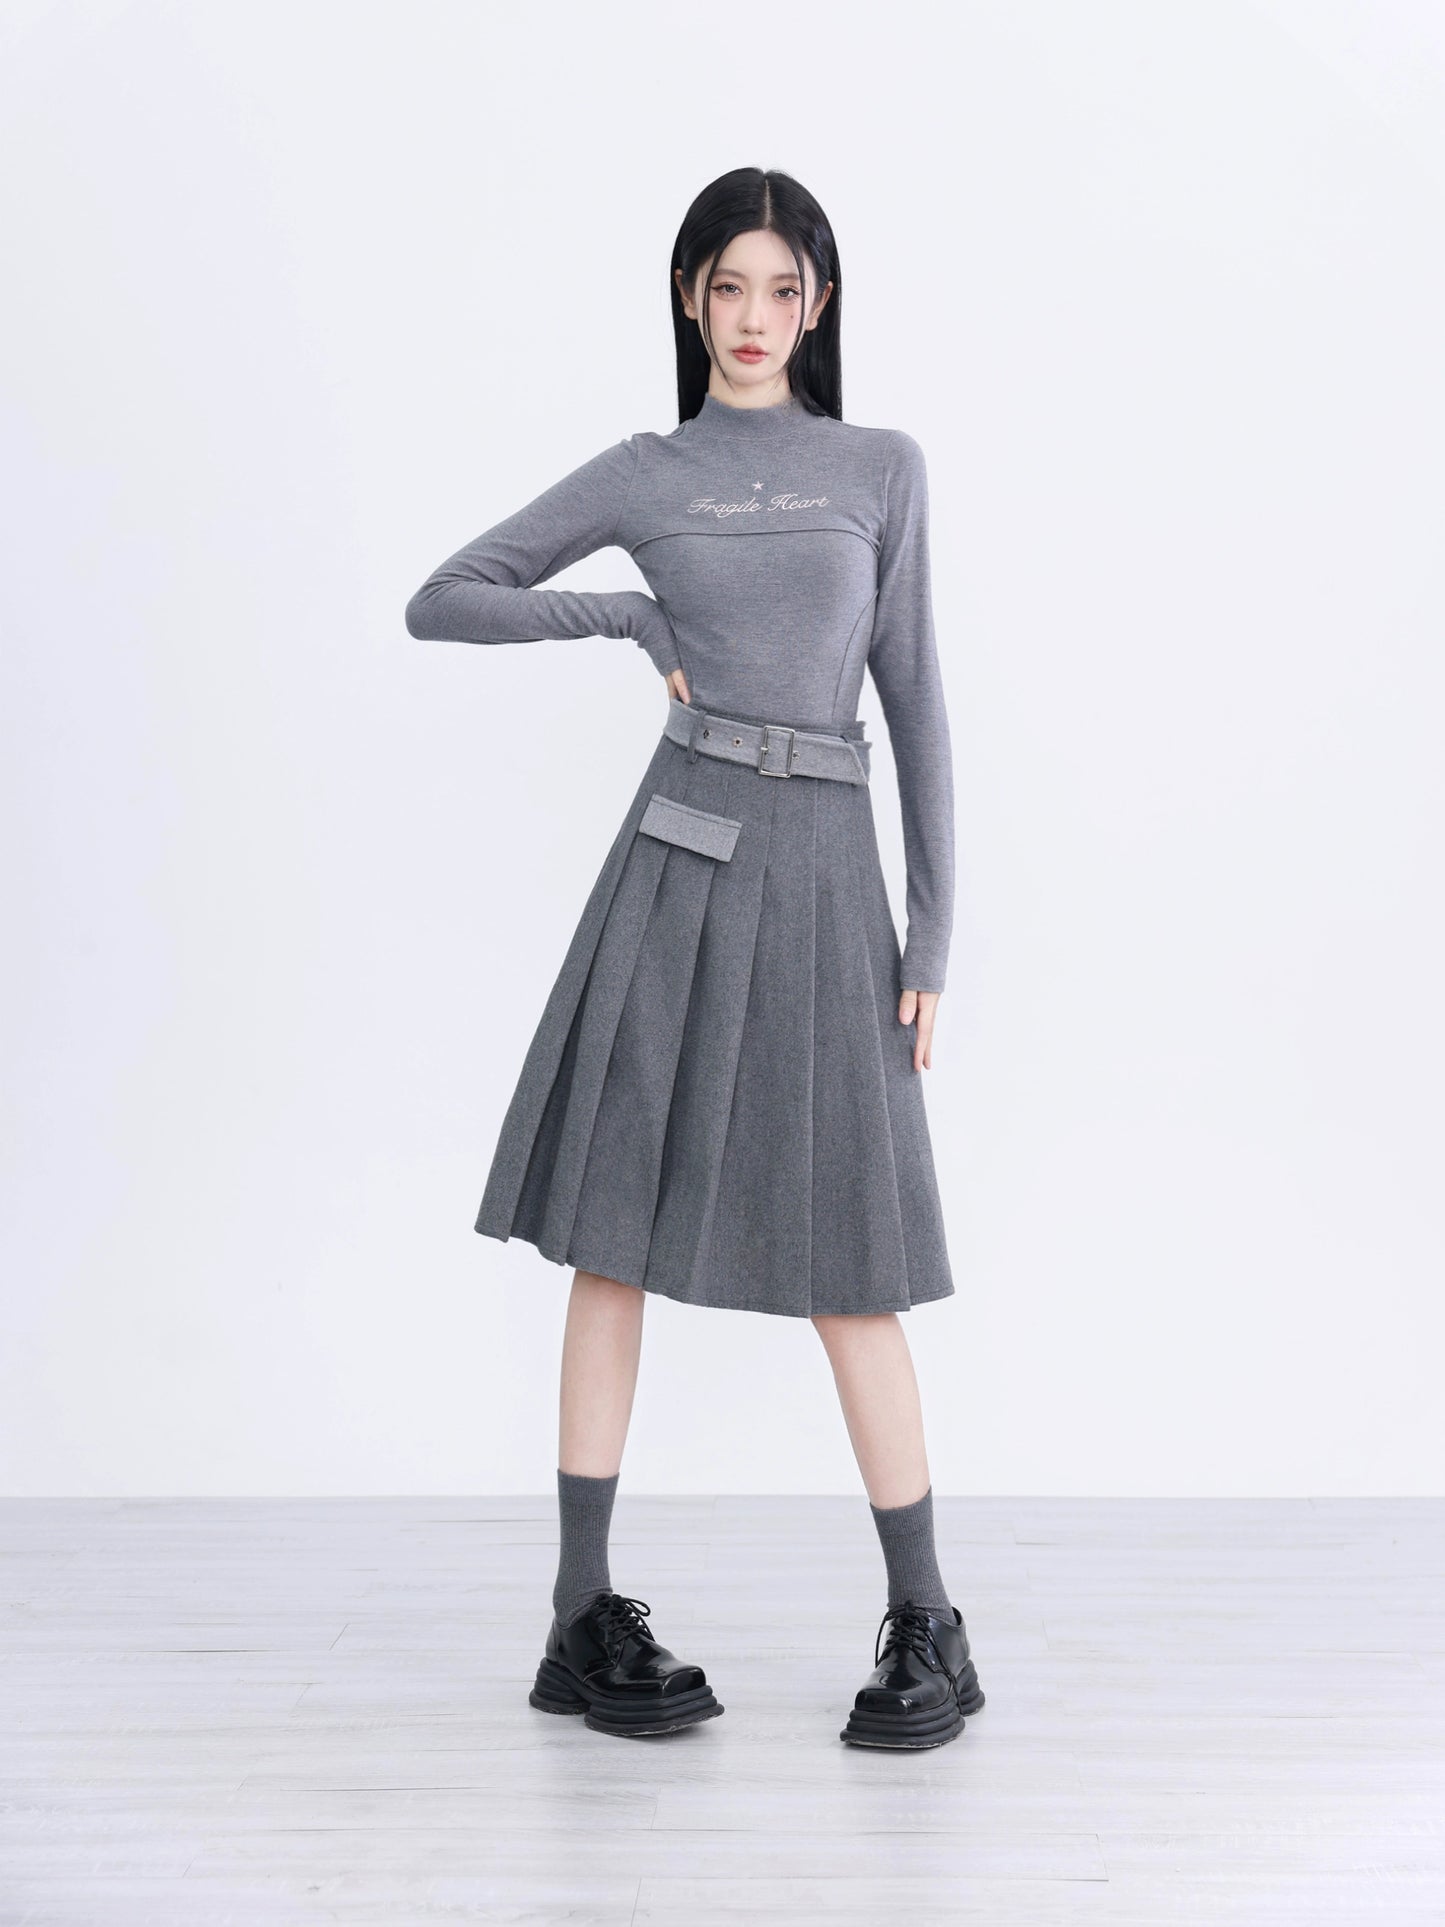 Retro Spliced Gray Pleated Skirt